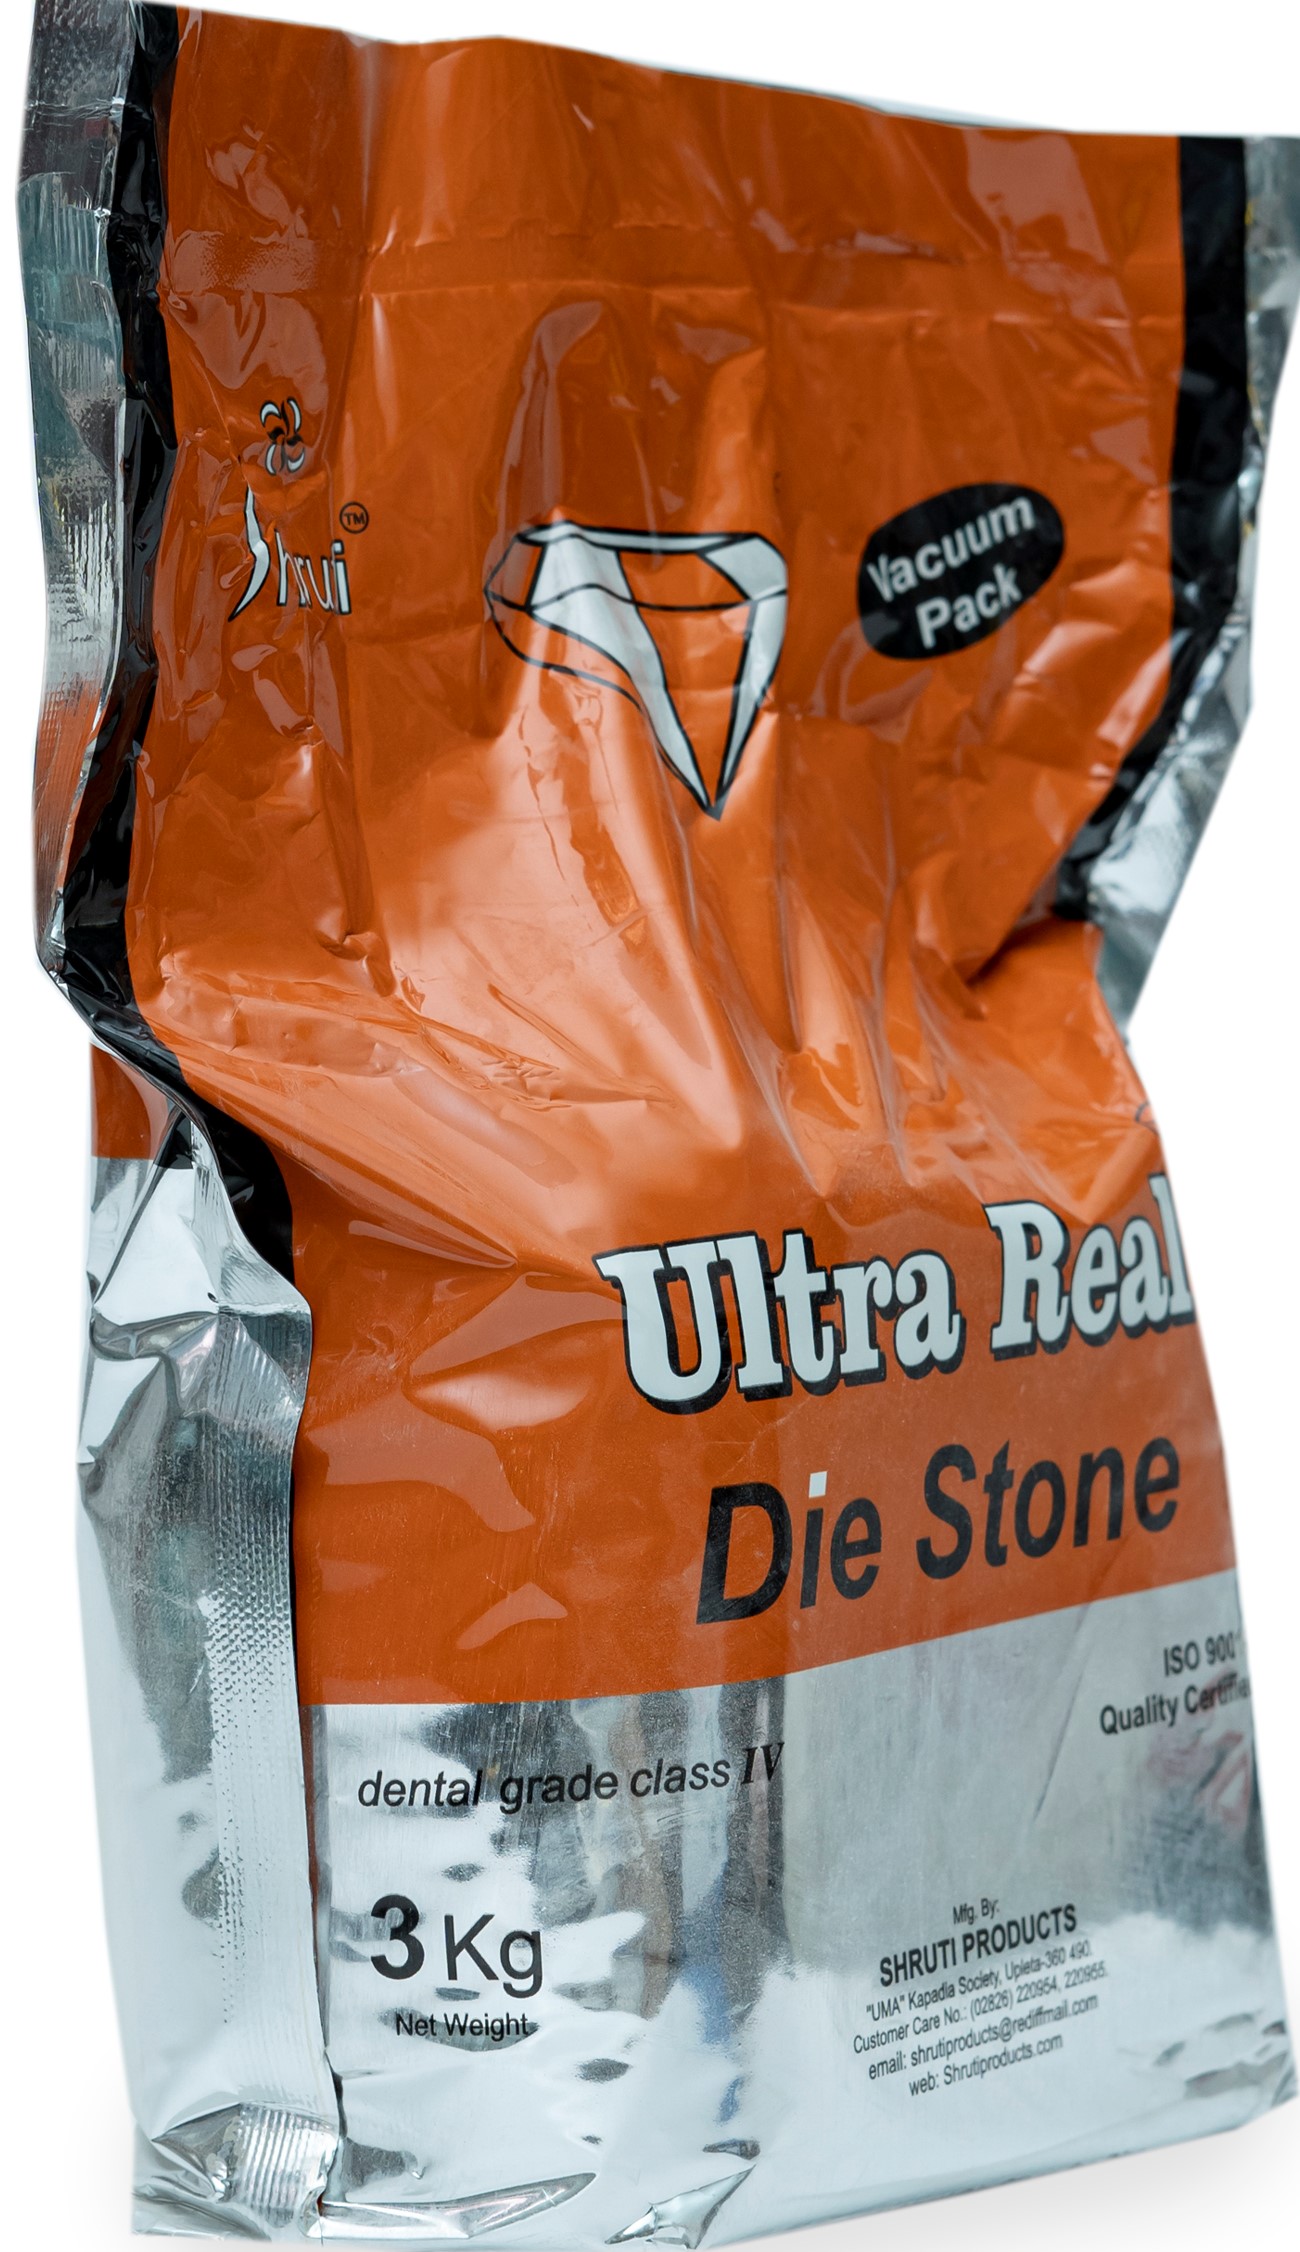 Shruti Ultra Die Stone 3Kg